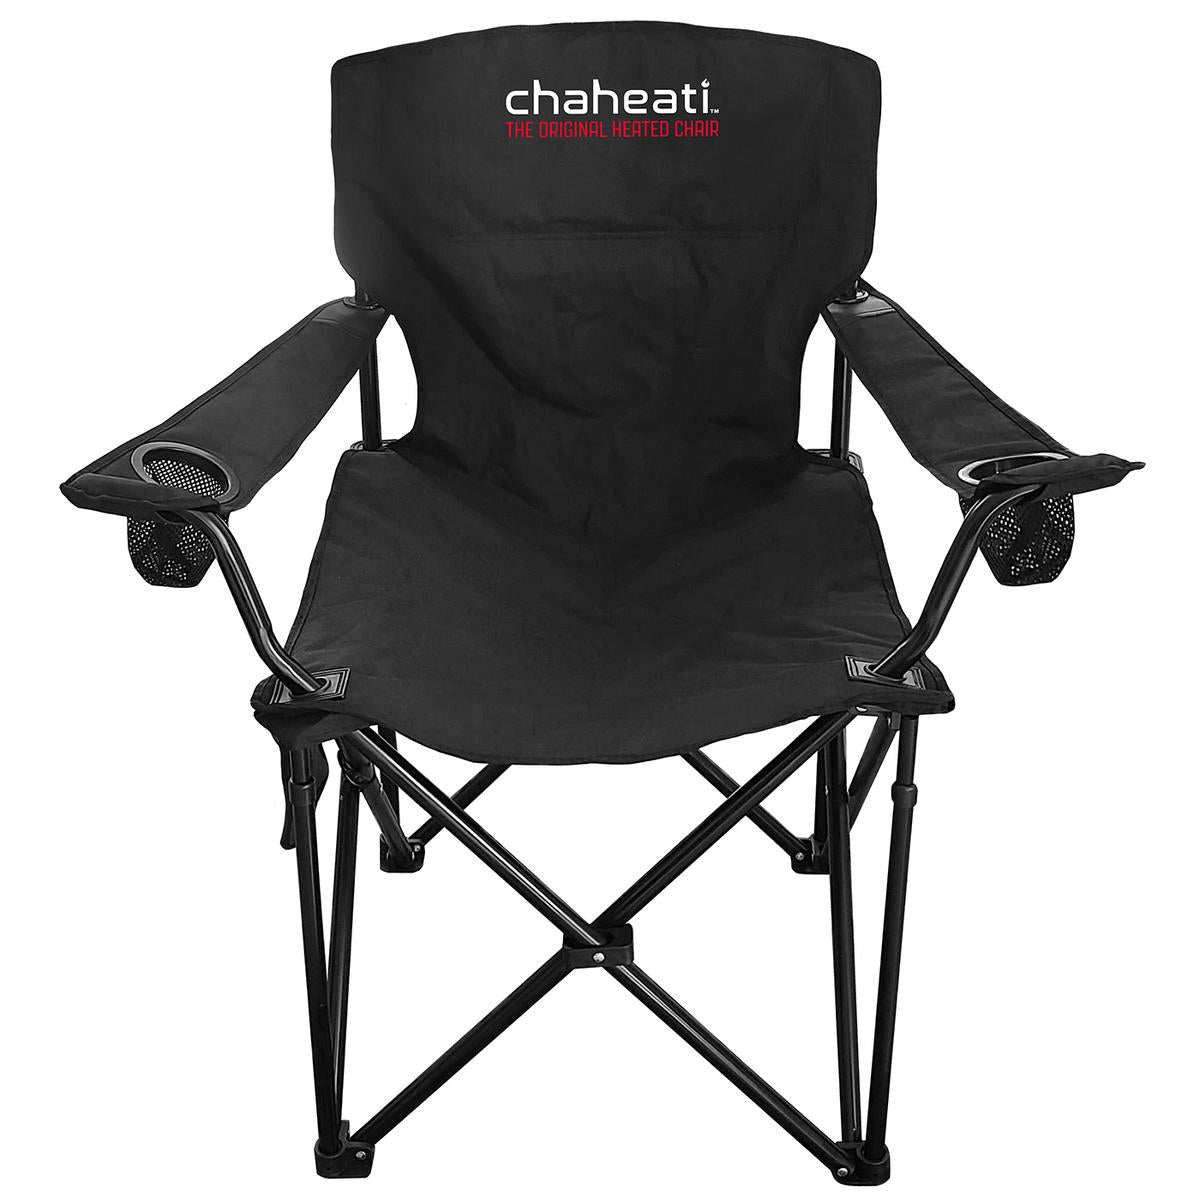 Chaheati 7V Battery Heated Camping Chair - Heated